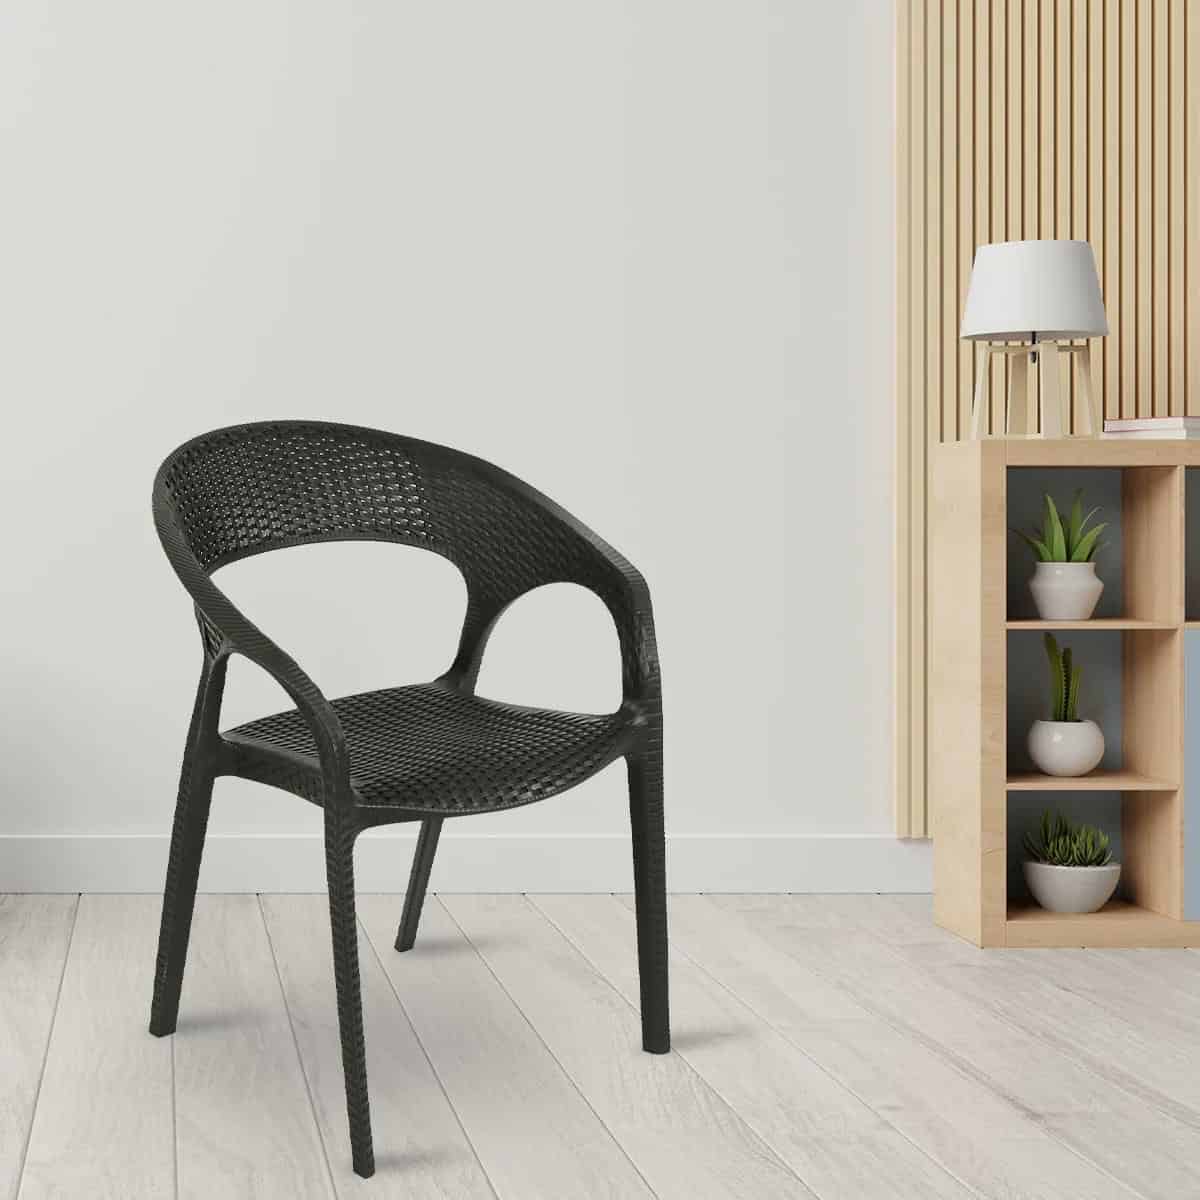 Nilkamal black garden chair